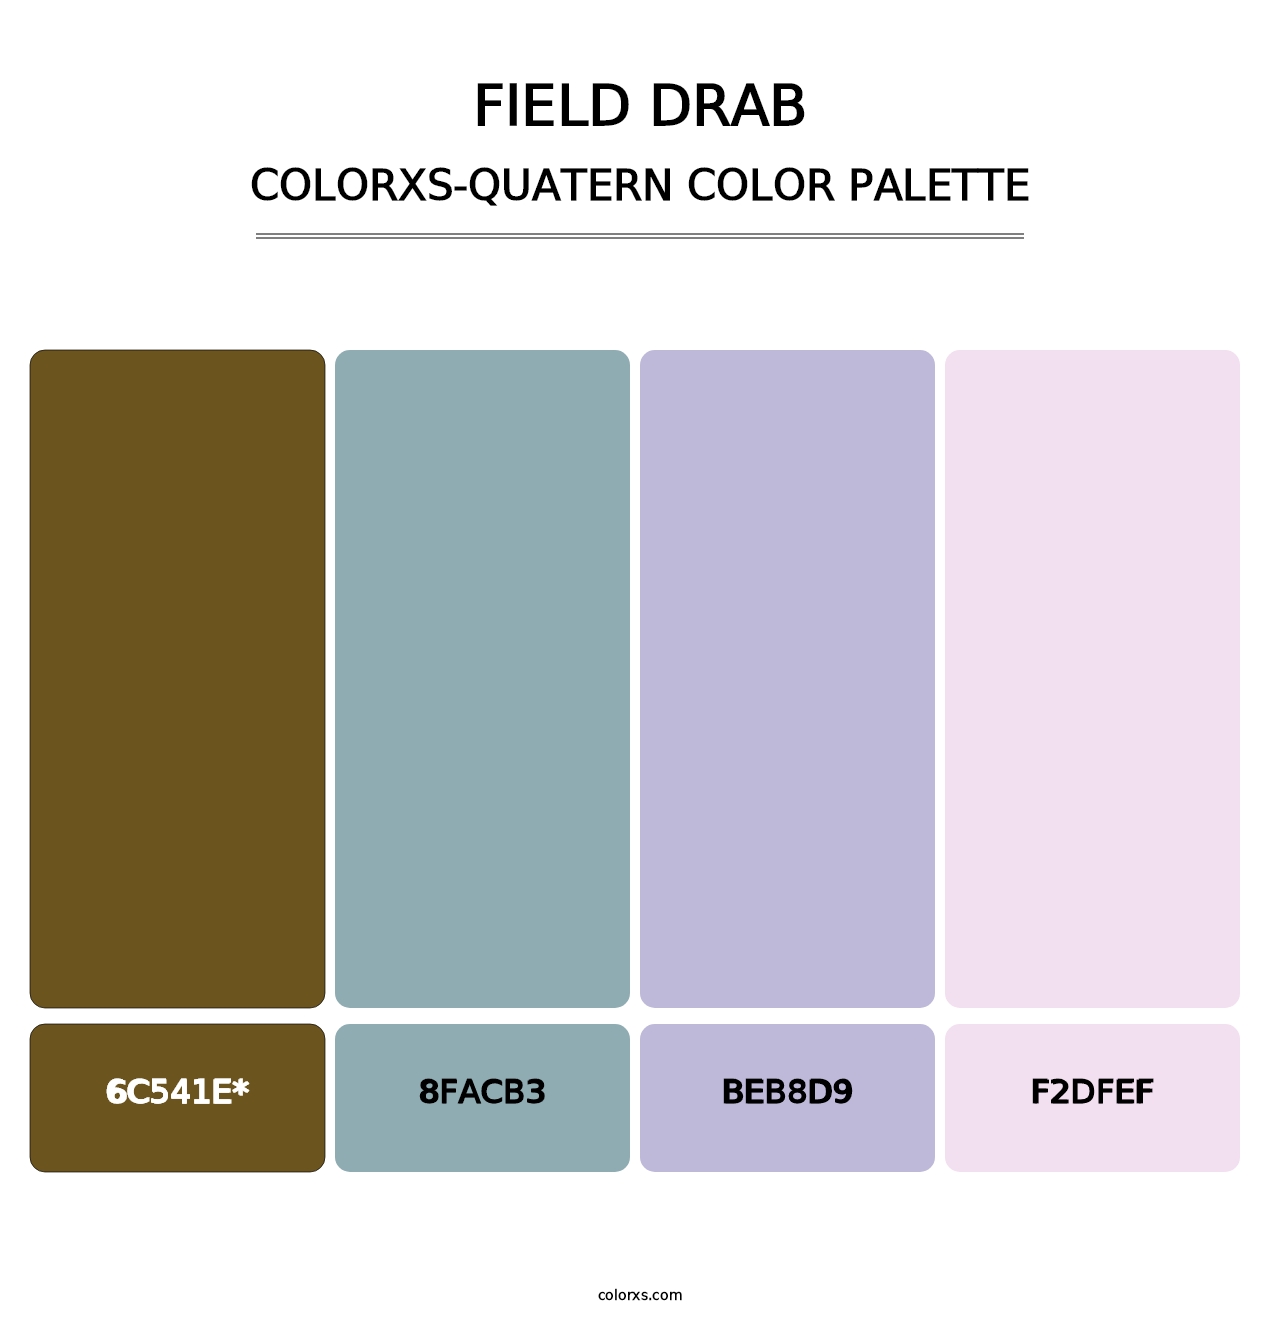 Field Drab - Colorxs Quatern Palette